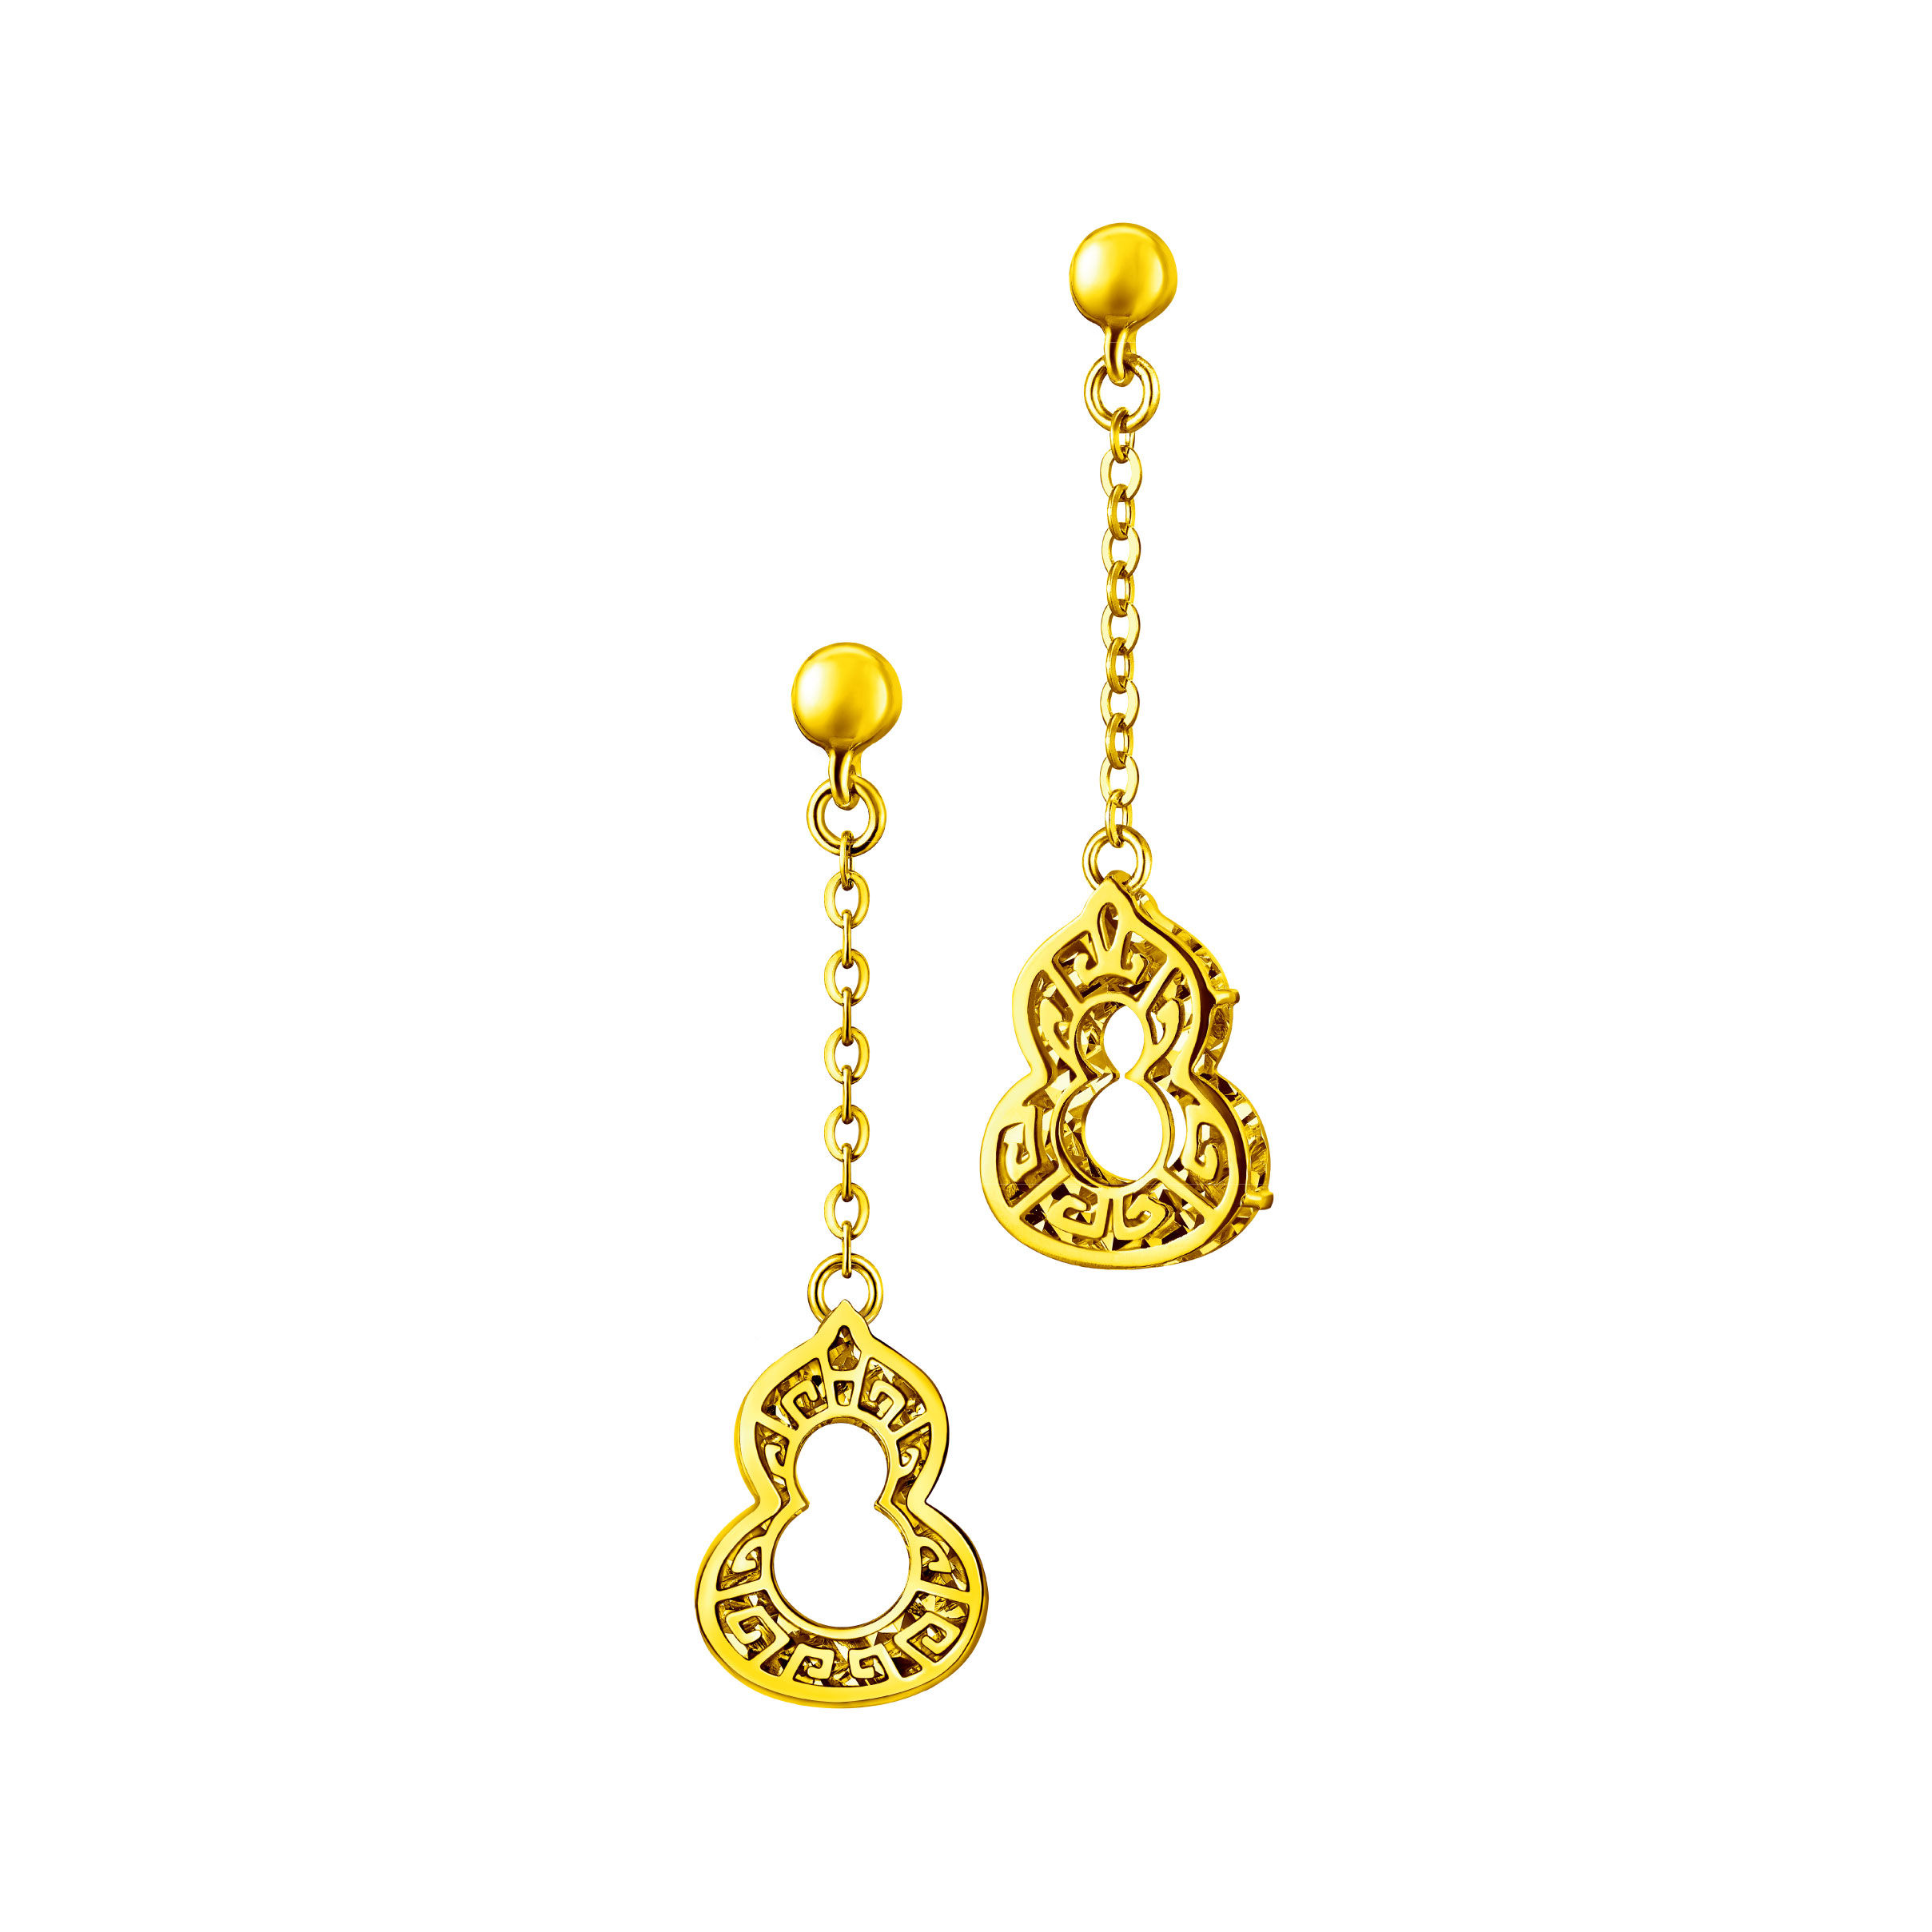 Goldstyle "Gourd" Gold Earrings